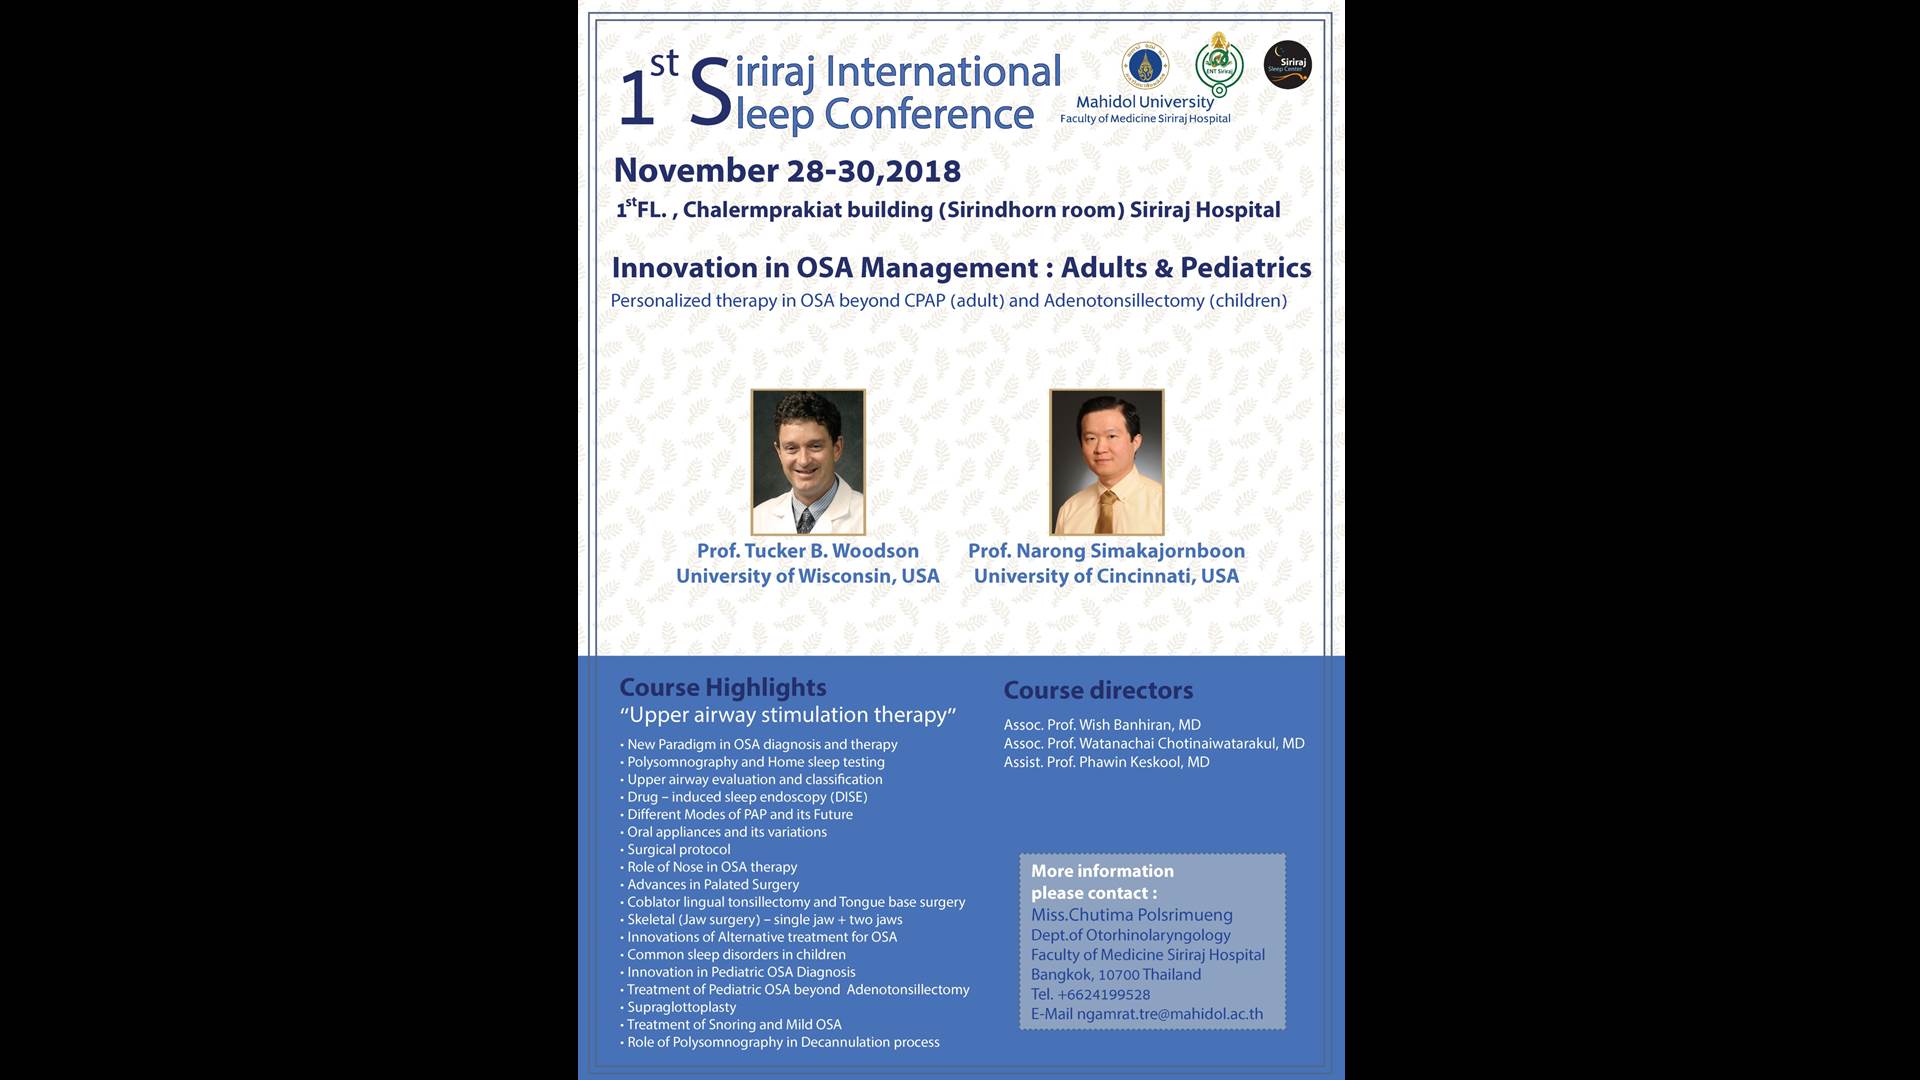 The 1st Siriraj Sleep Conference